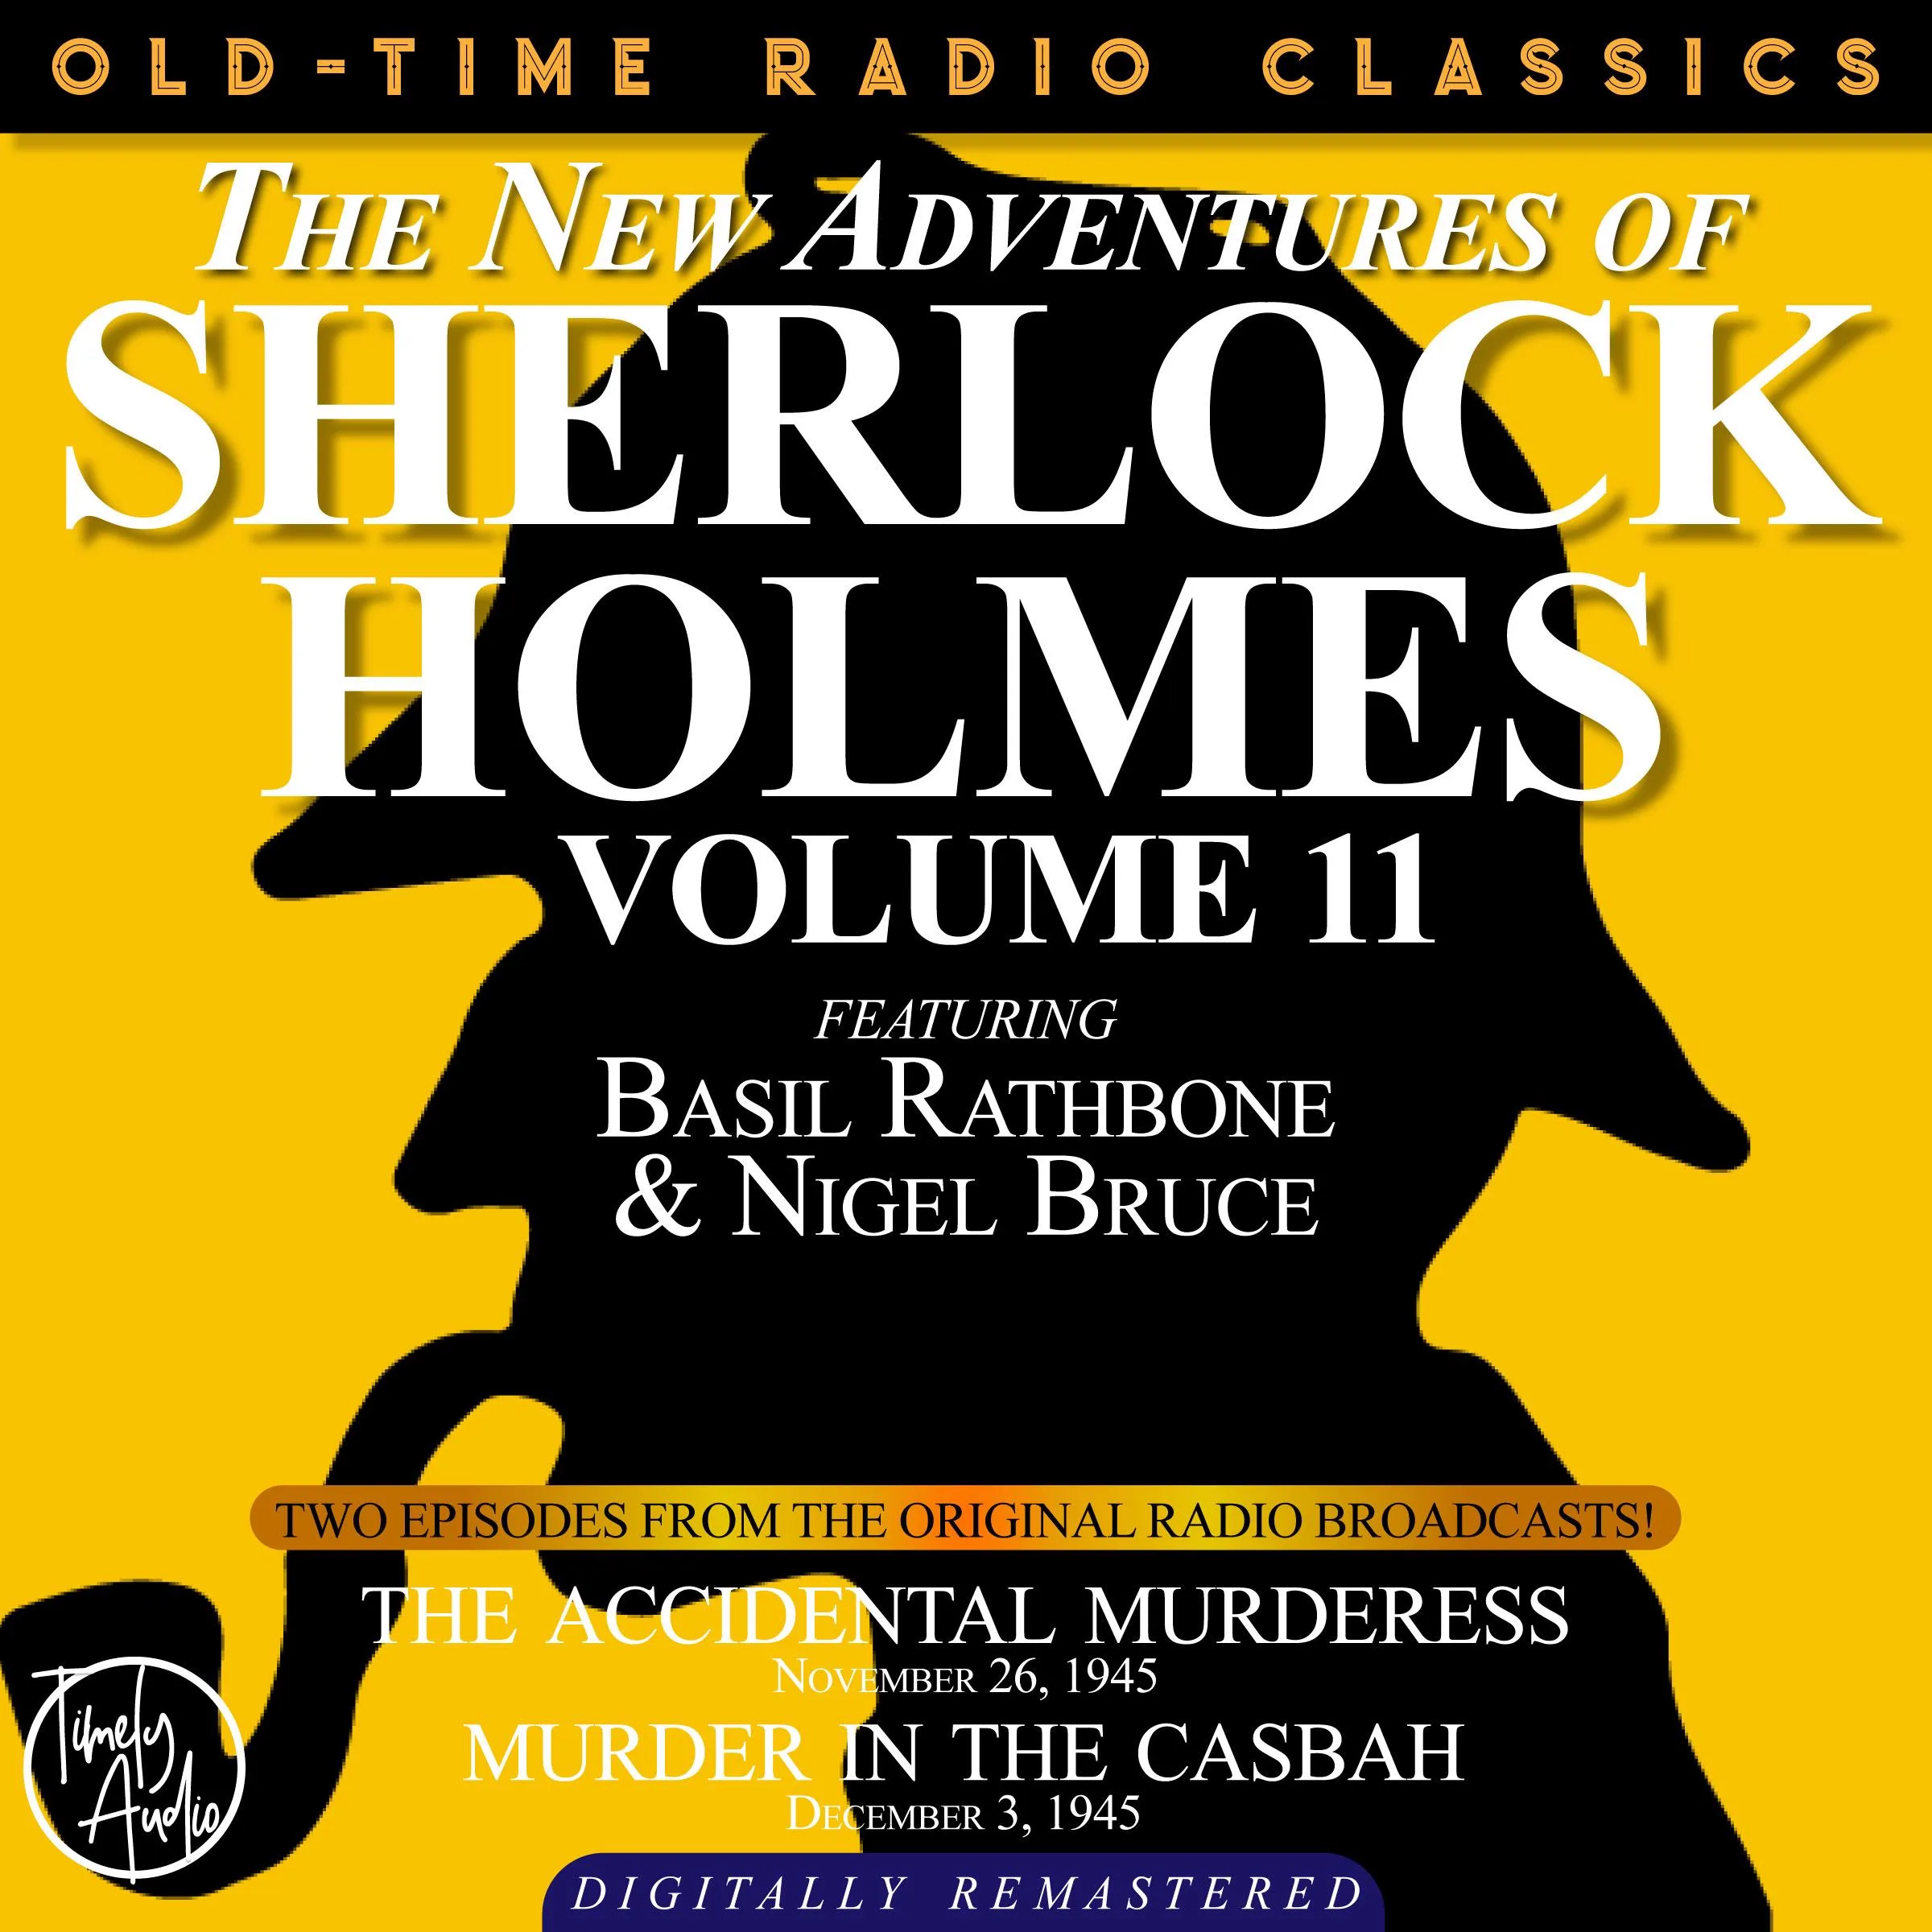 THE NEW ADVENTURES OF SHERLOCK HOLMES, VOLUME 11